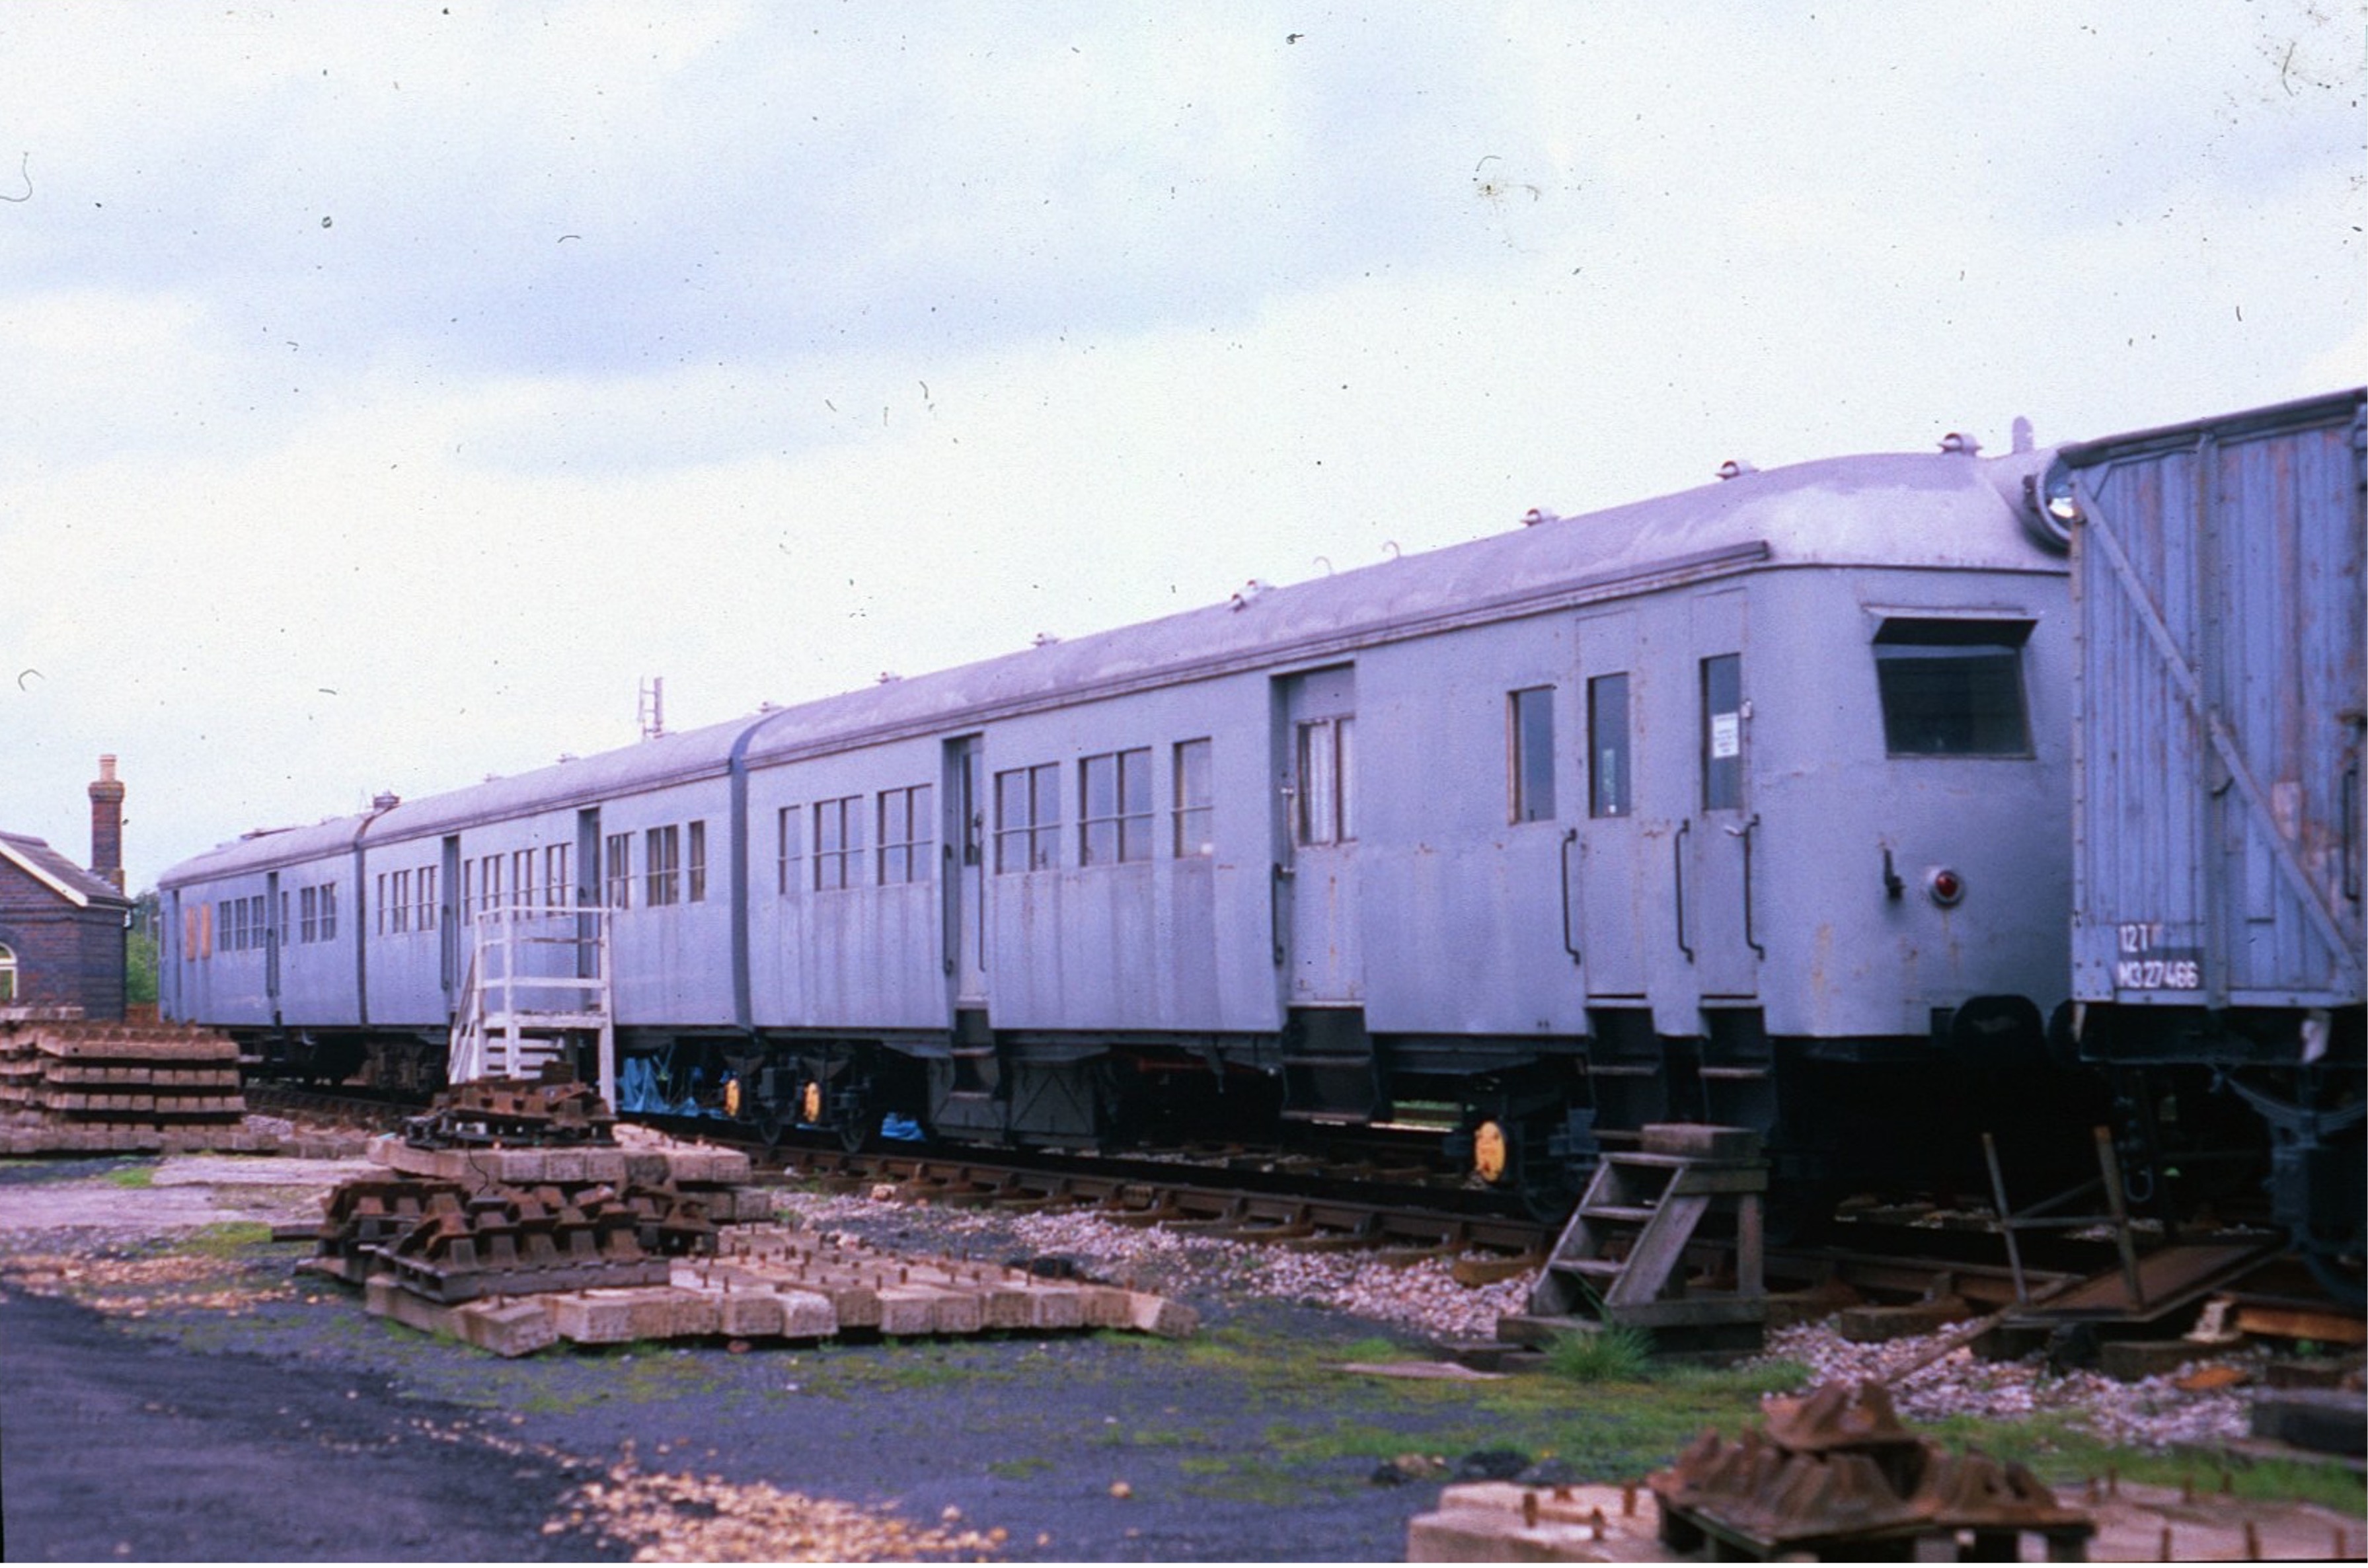 Railcar, Sentinel 9518/1950